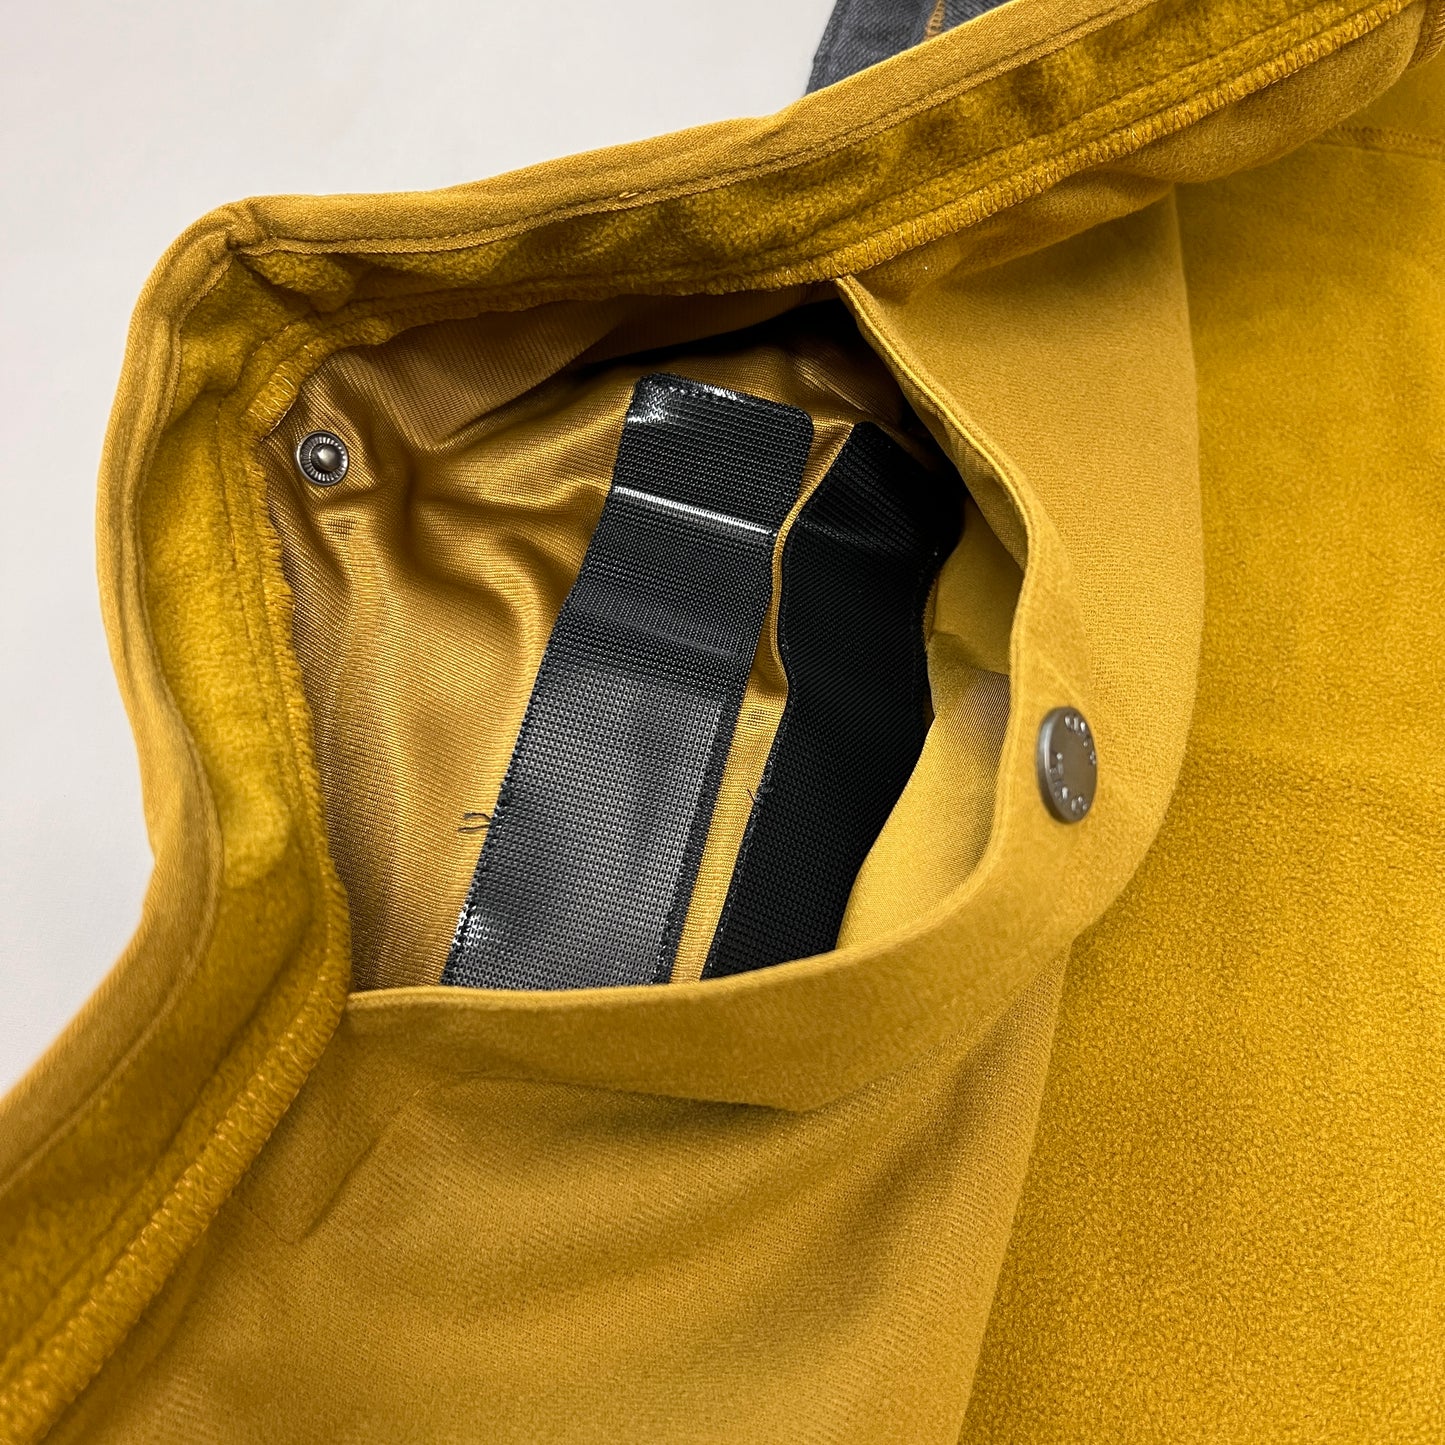 CINCH Concealed Carry Bonded Vest Men's SZ S Charcoal MWV1541006 (New)